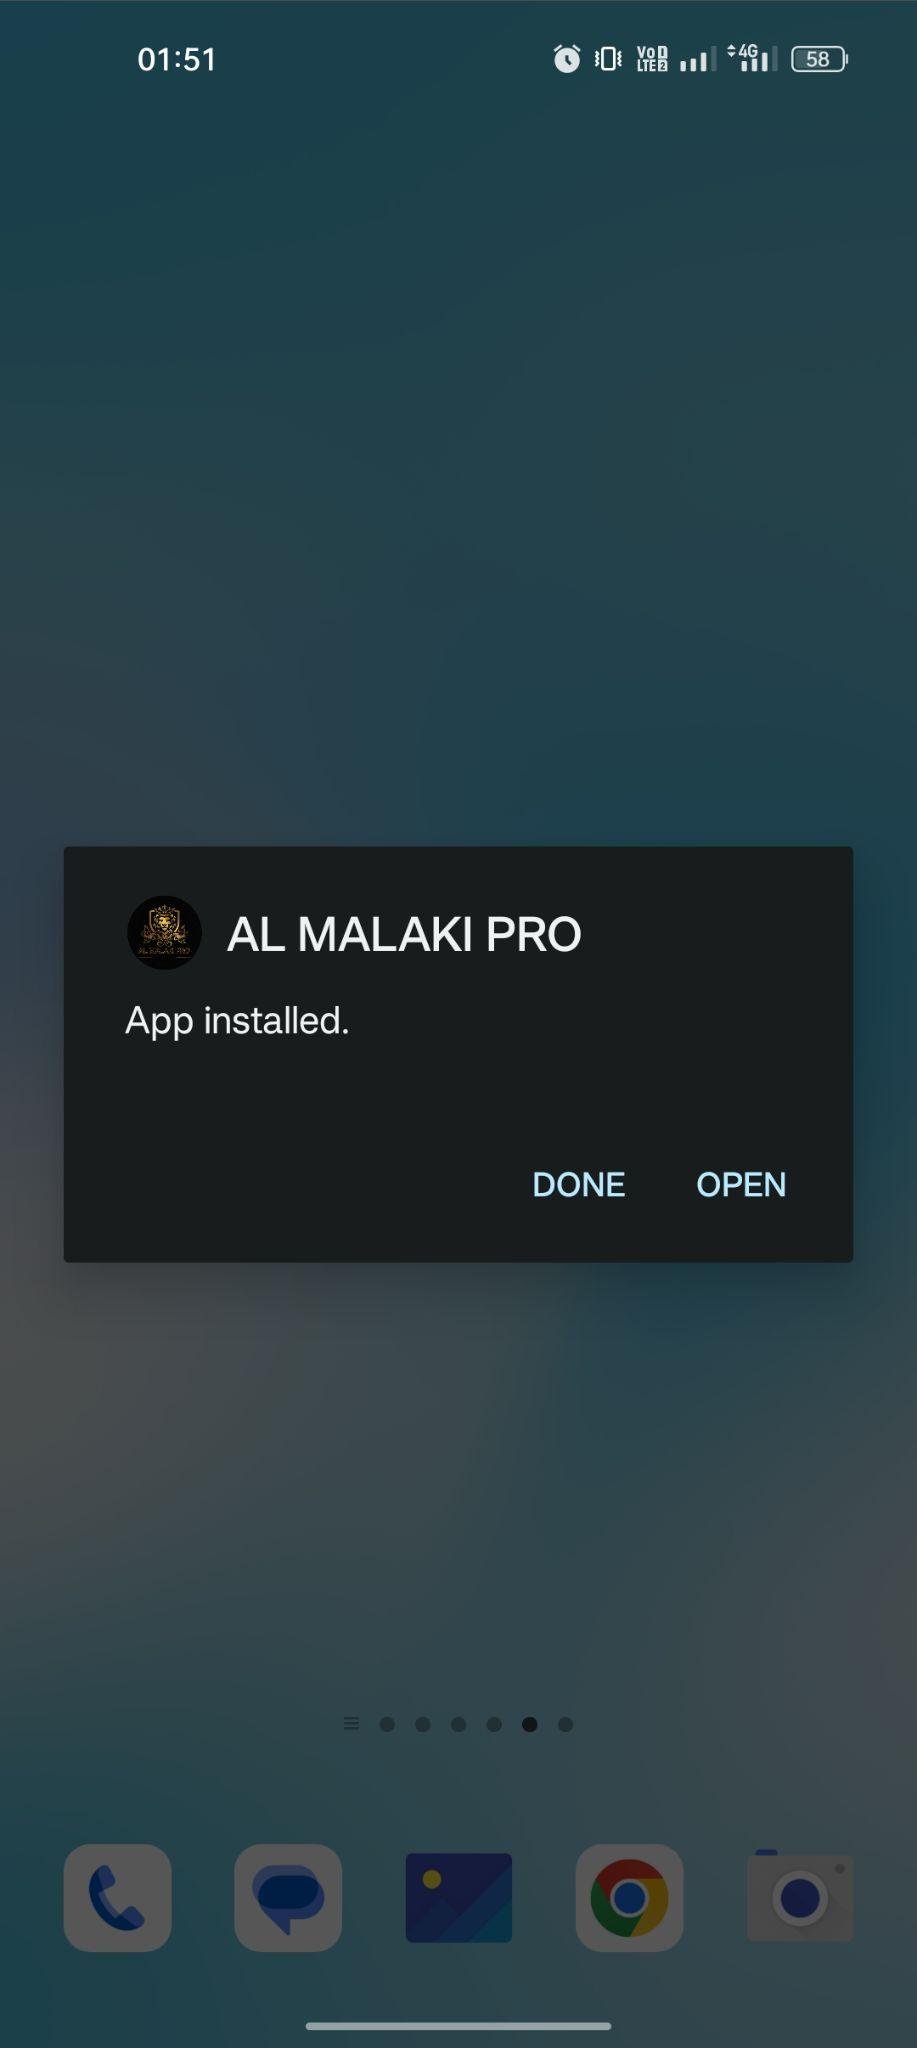 AL MALAKI PRO apk installed